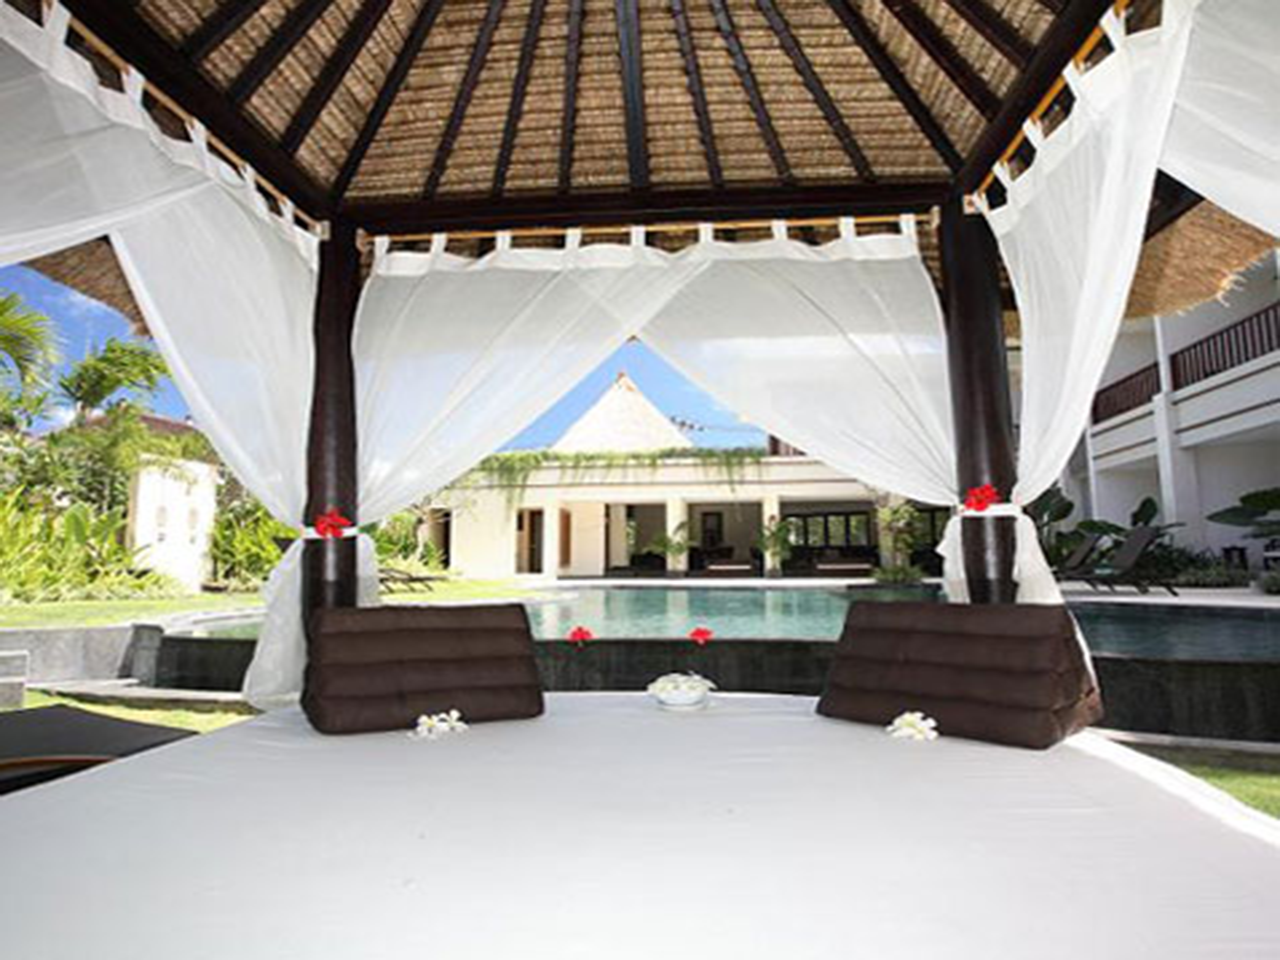 
Villa Diana Bali